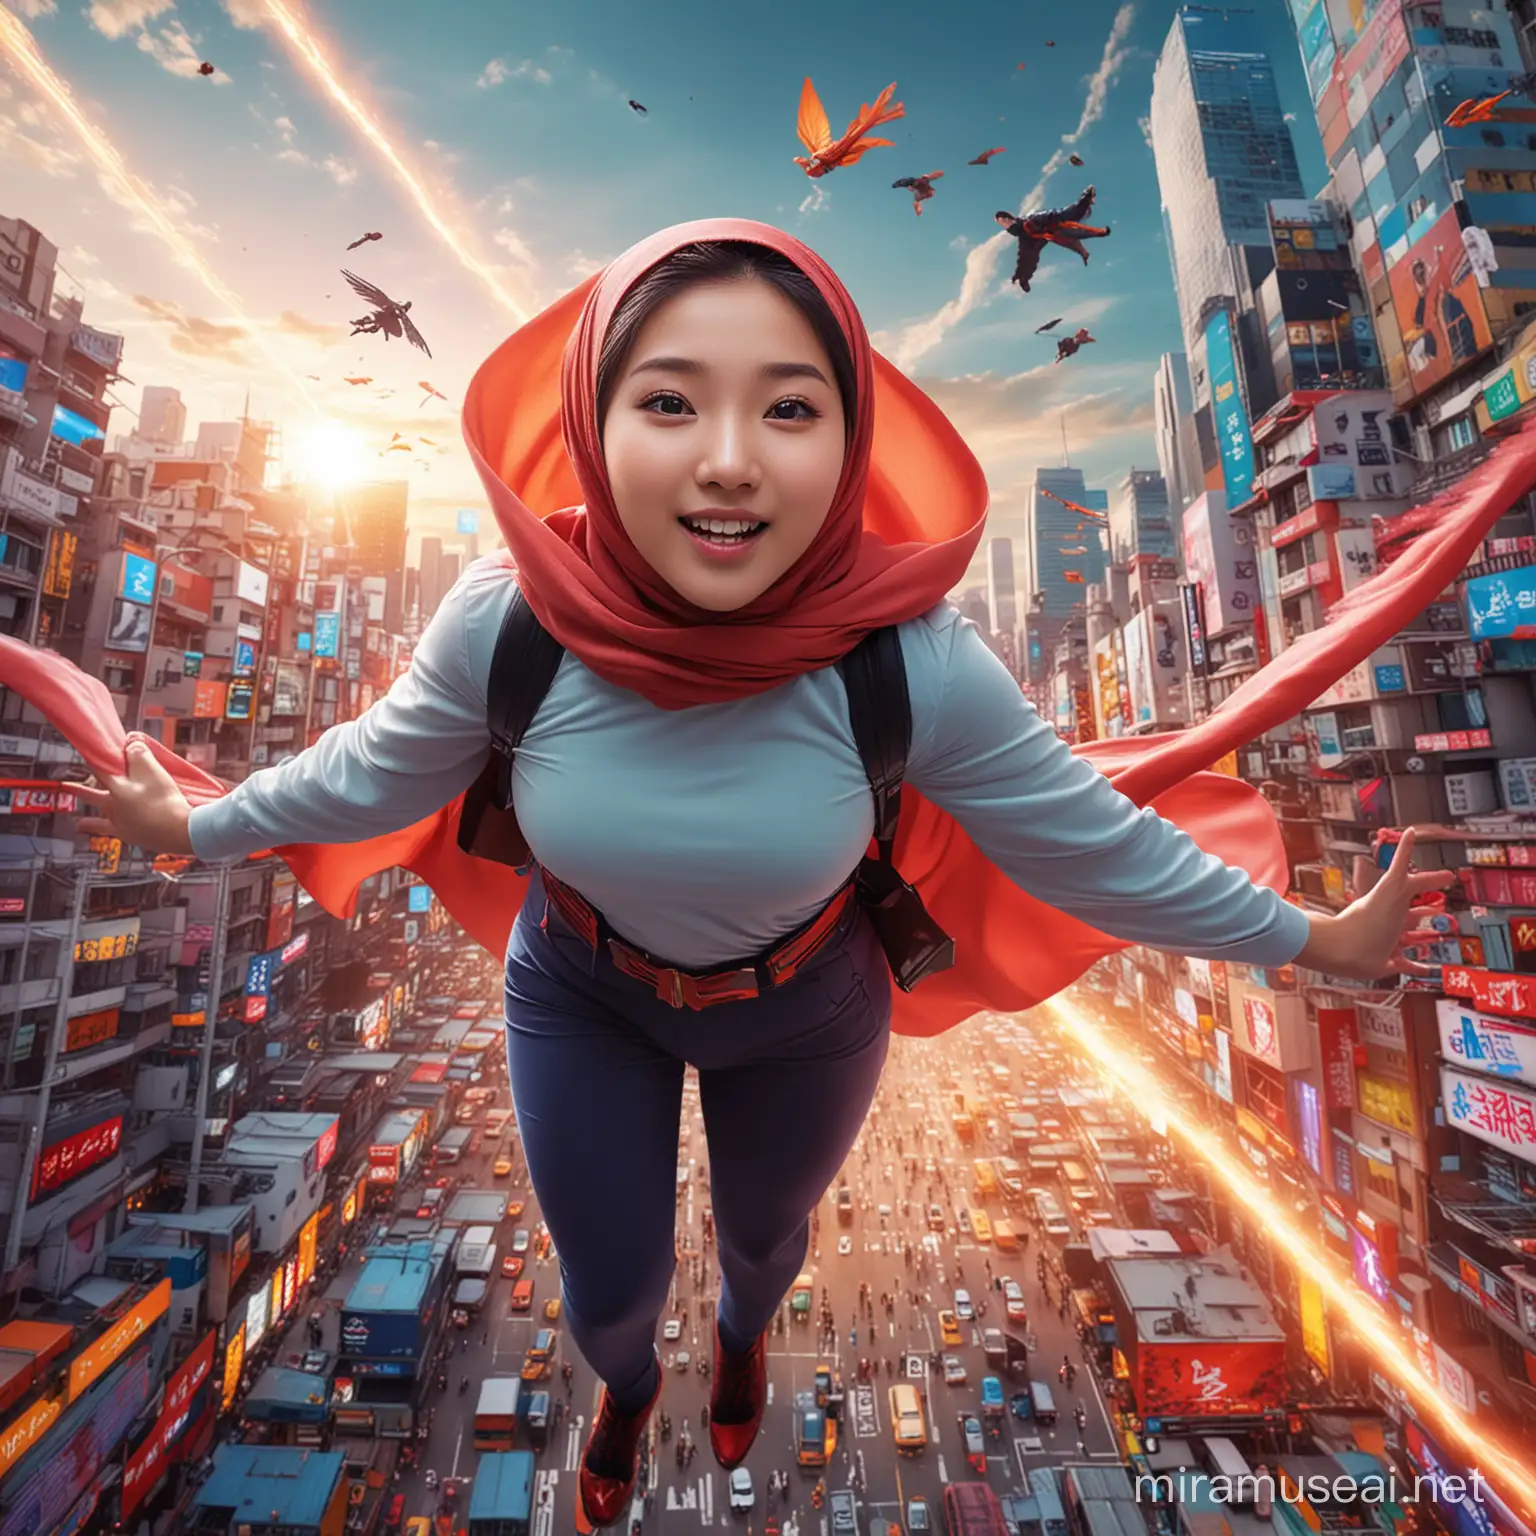 Japanese Hijabi Superheroine Soars Over Cityscape with Radiant Powers